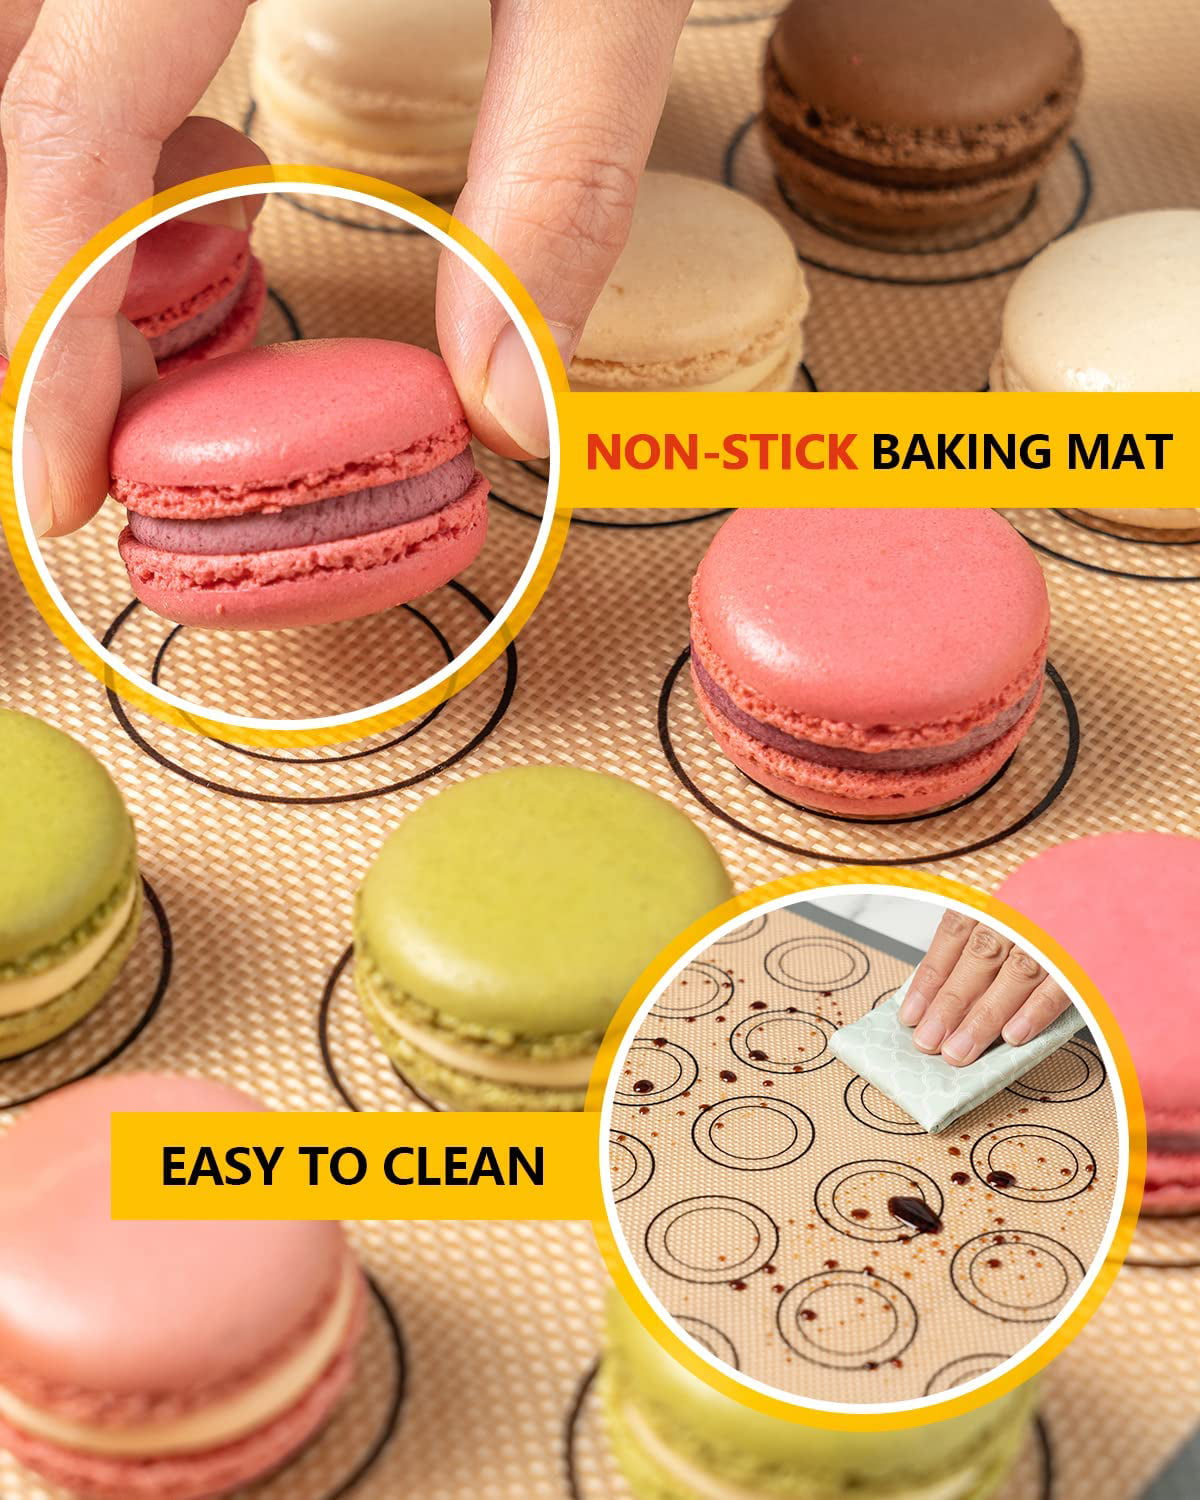 Baker's Mark 11 3/4 x 16 1/2 Half Size Heavy-Duty Allergen-Free Purple  Silicone Non-Stick (32) 1 3/8 Macaron Baking Mat